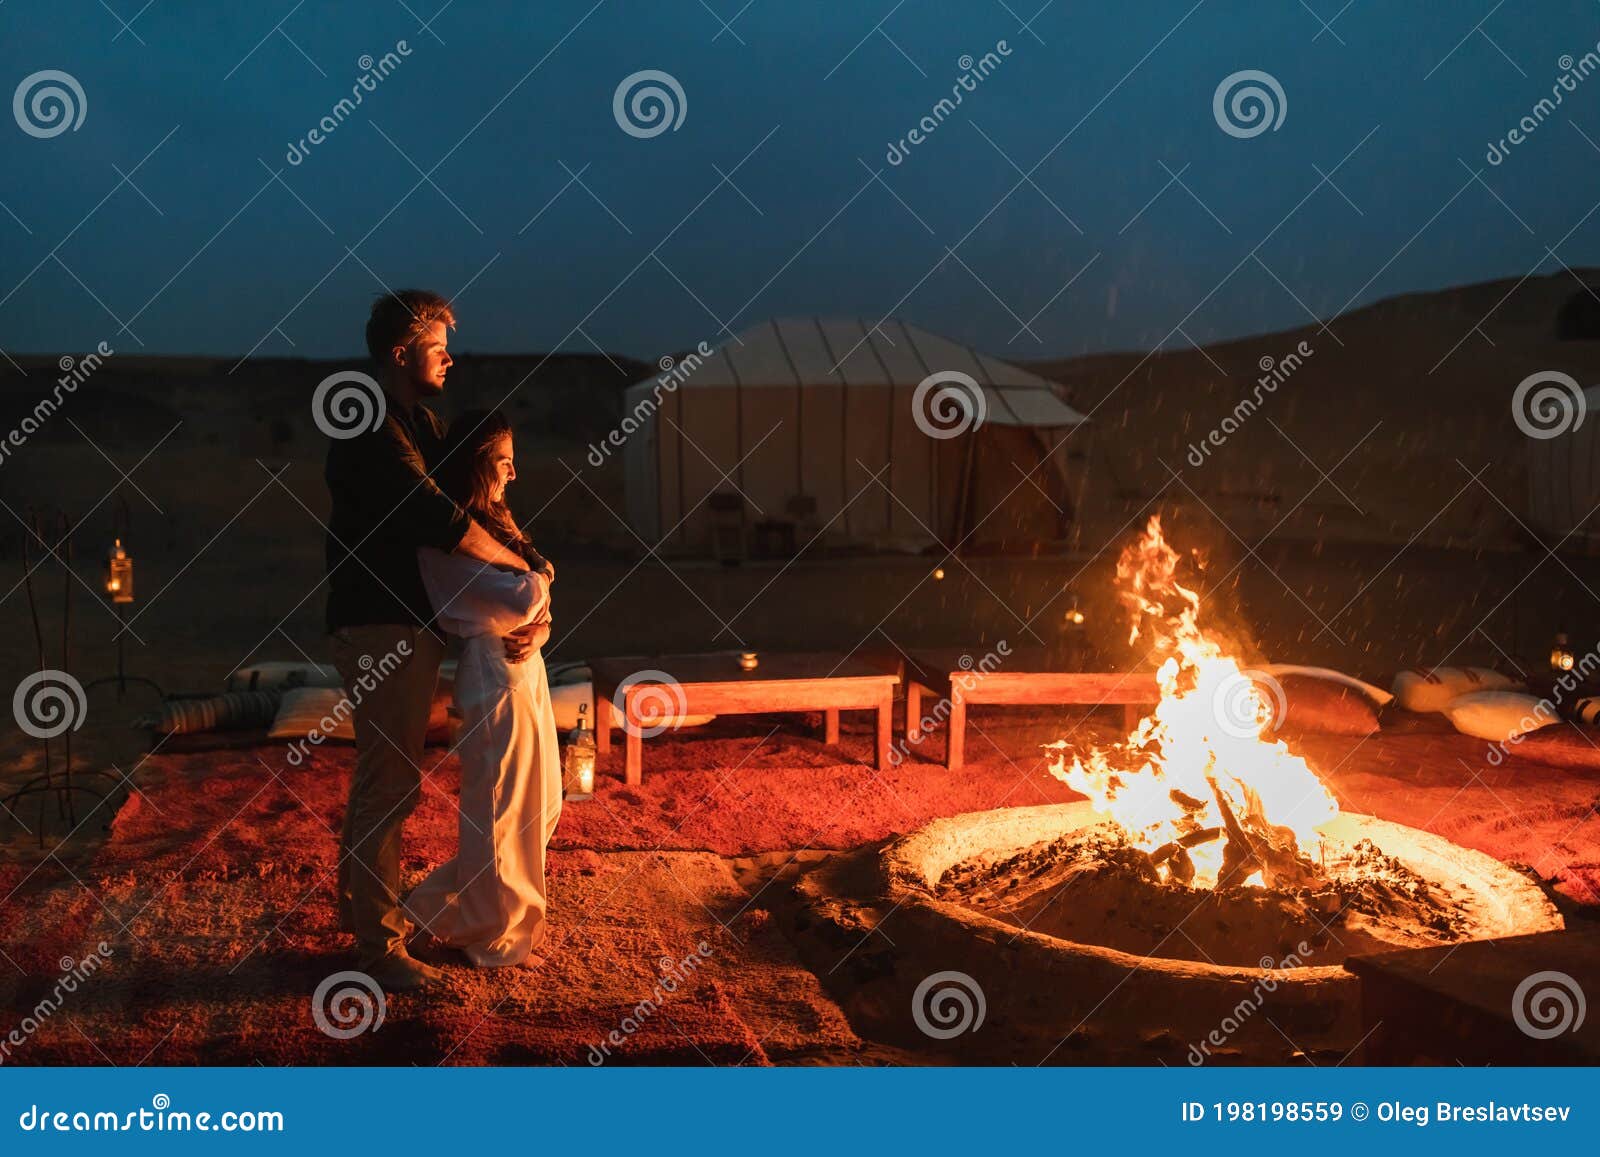 couple hug in love near big campfire. romantic night in glamping desert camp